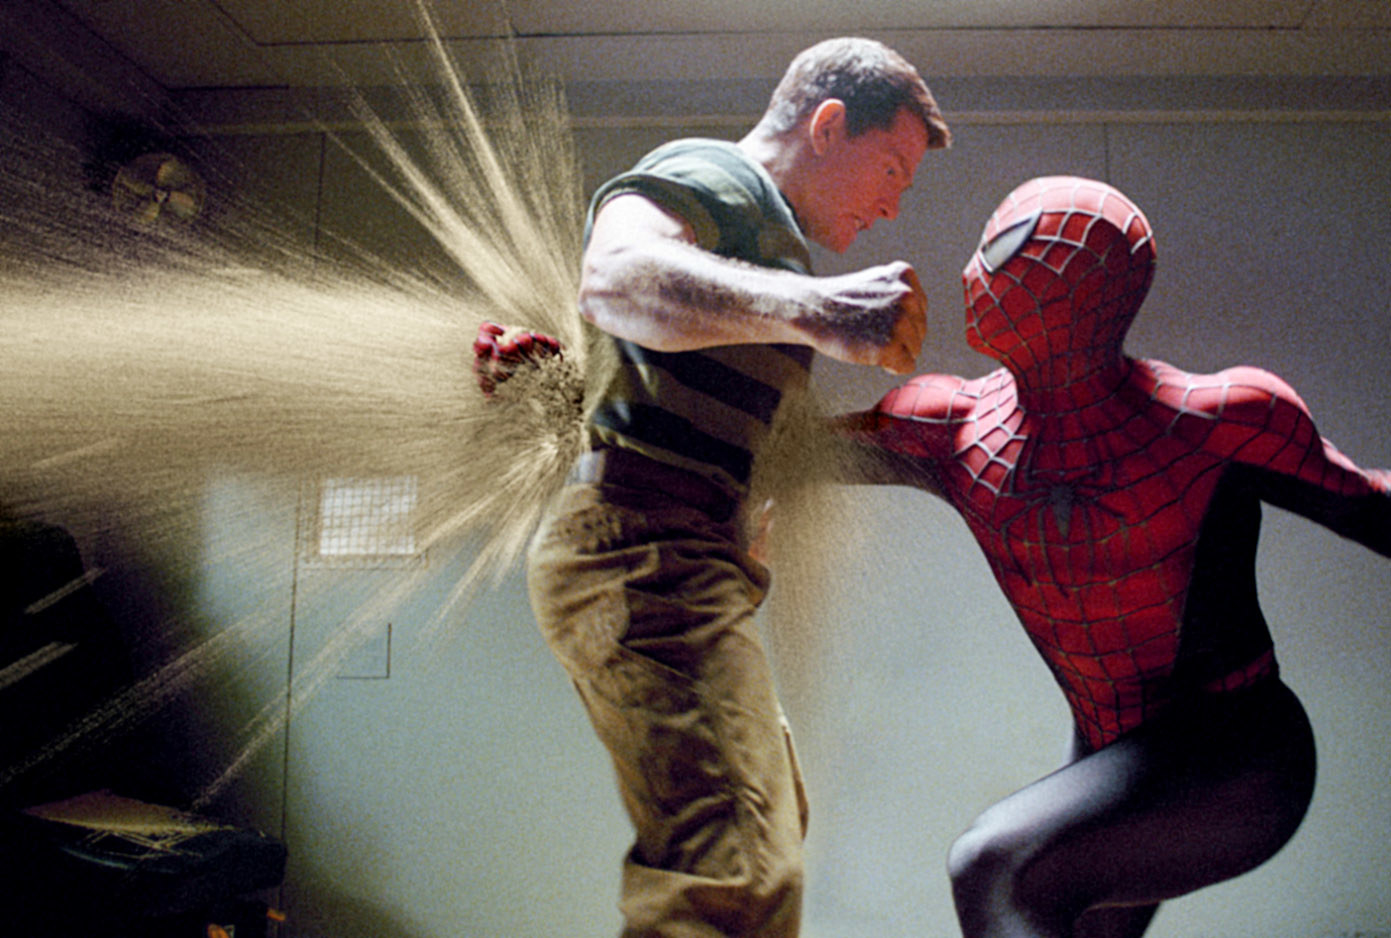 Spider-Man punches through the Sandman